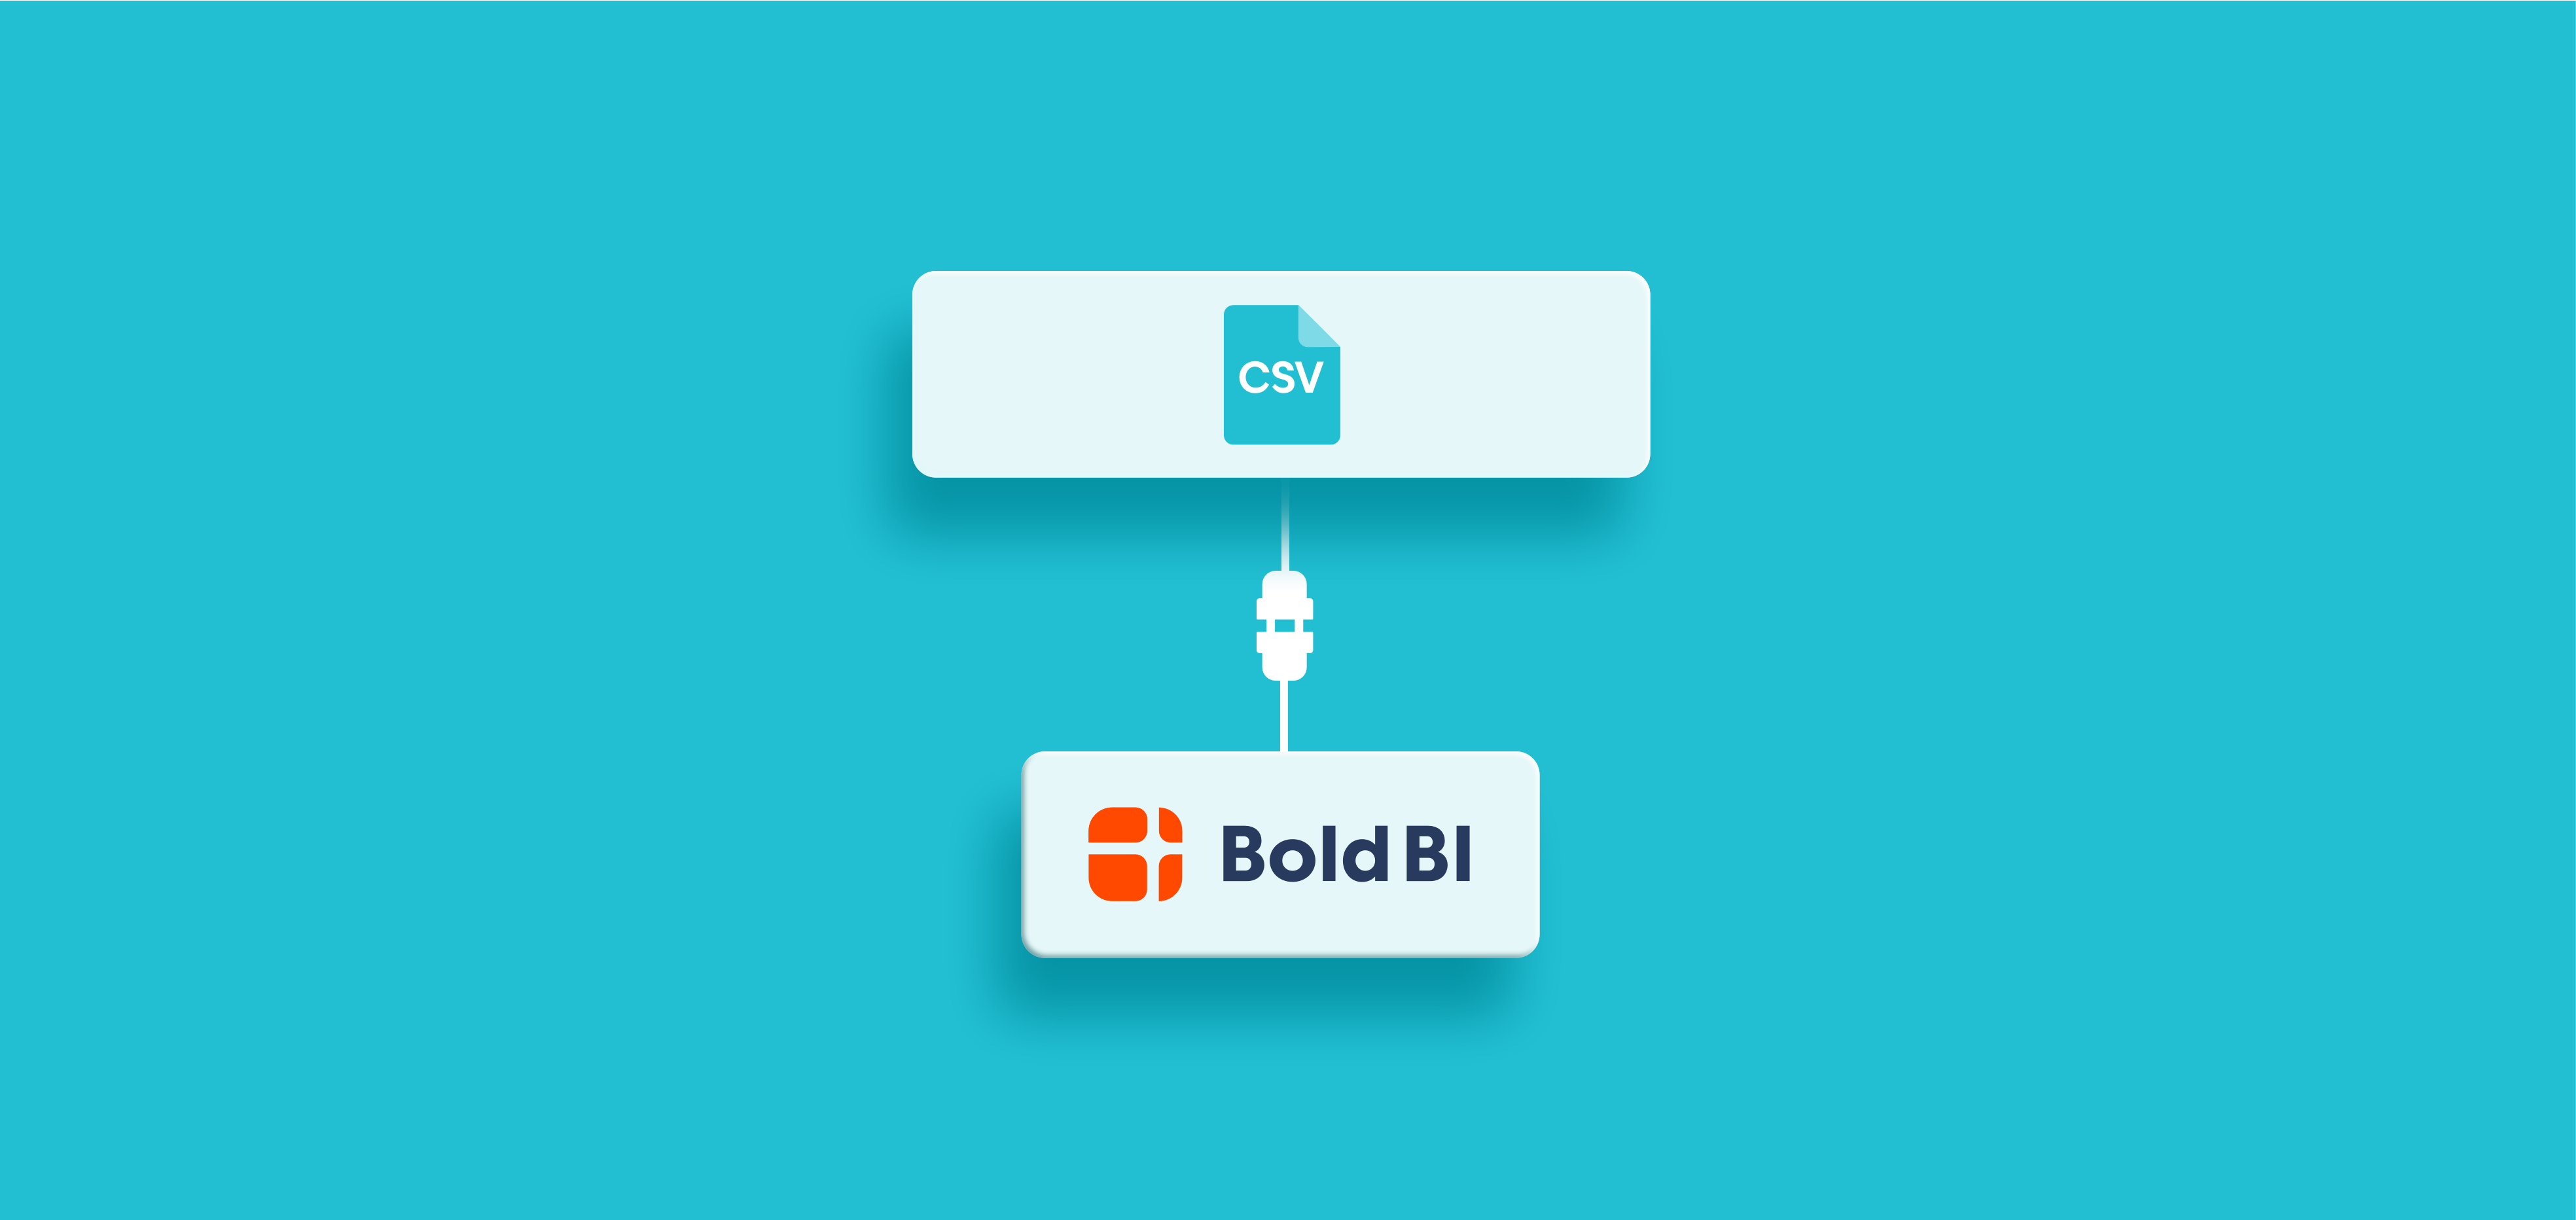 Connecting Bold BI to CSV data source